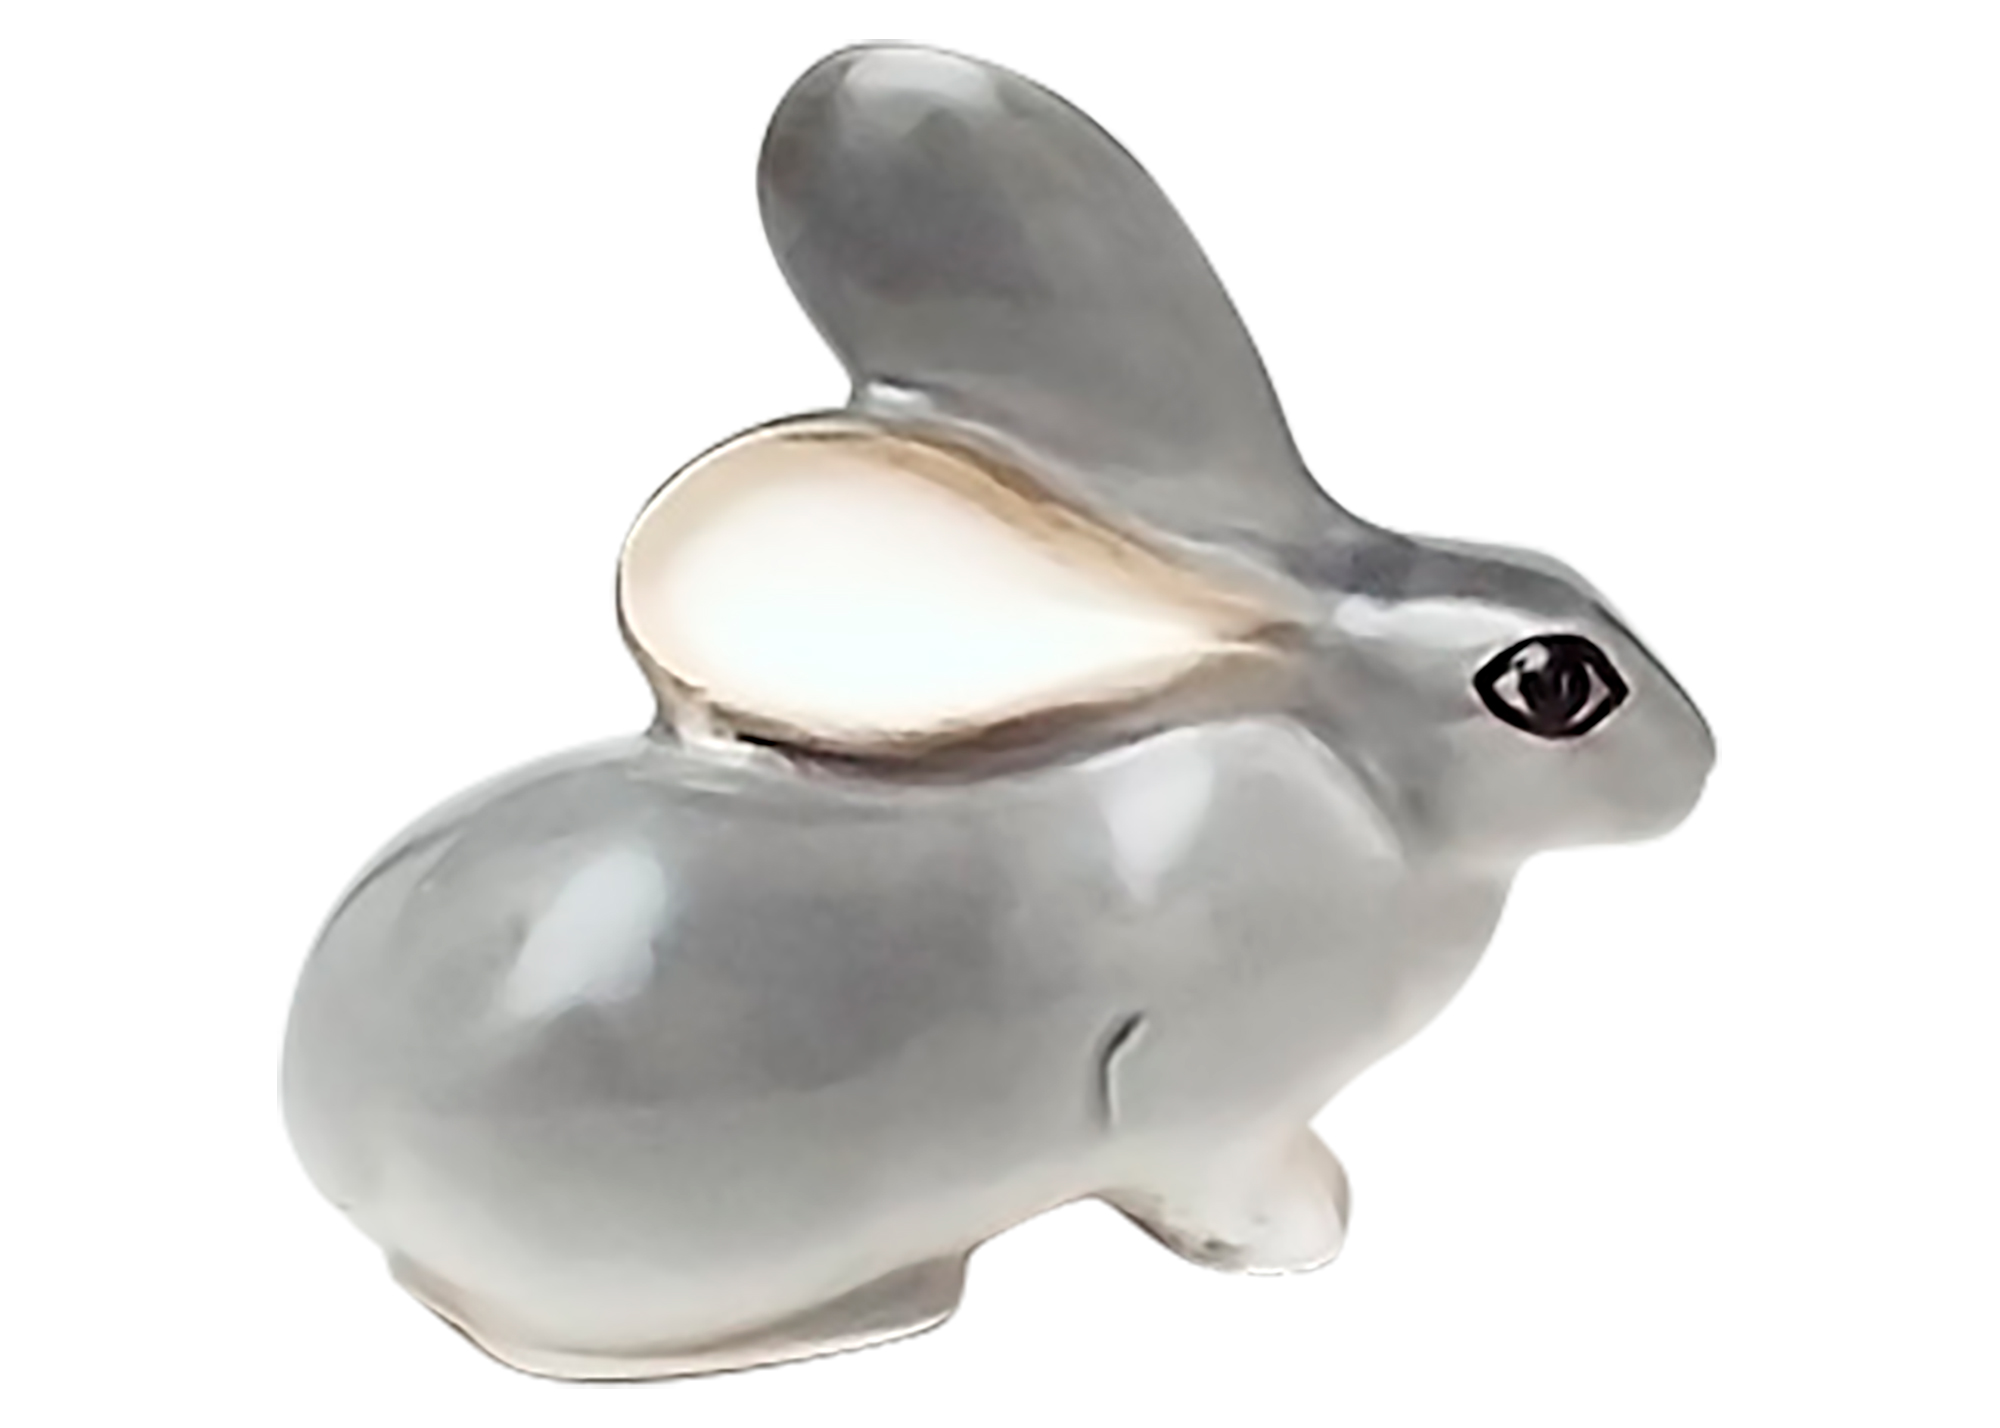 Buy Brown Wild Hare Figurine at GoldenCockerel.com